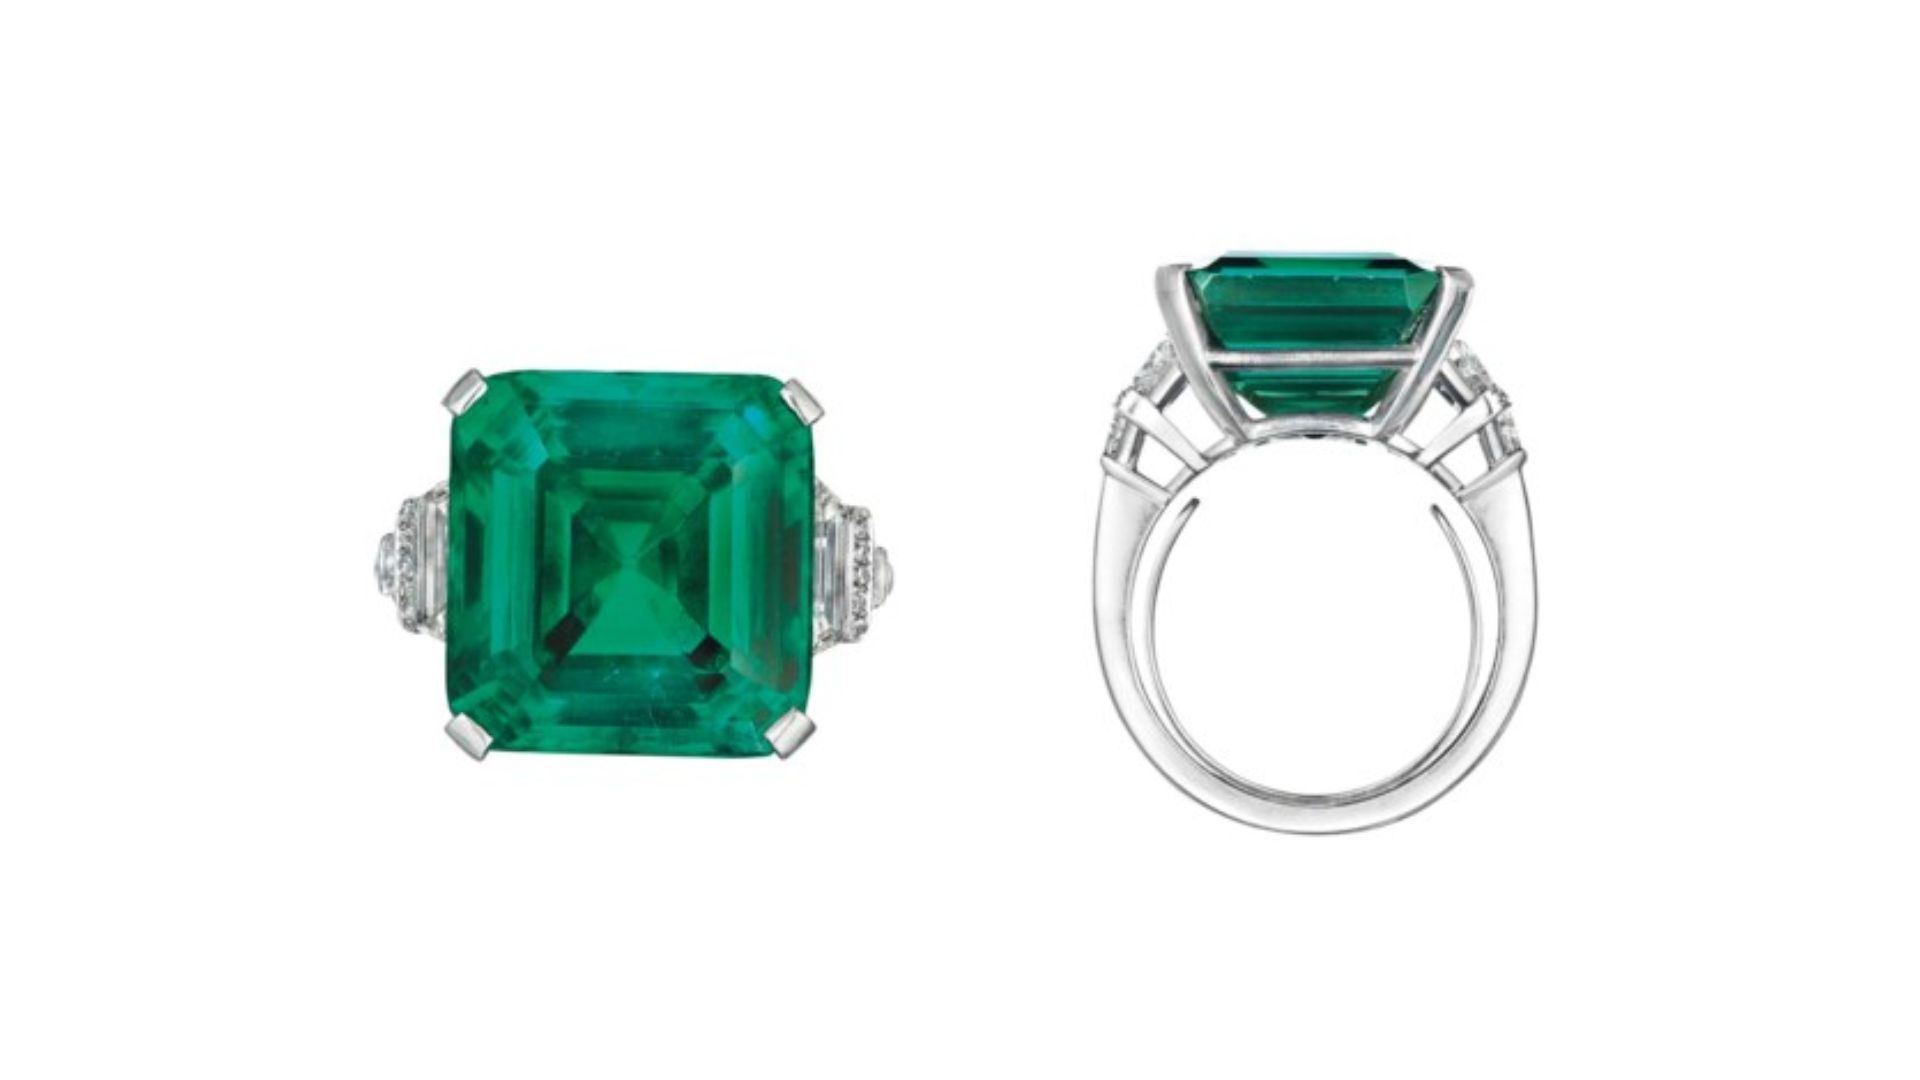 Rockefeller emerald and diamond ring